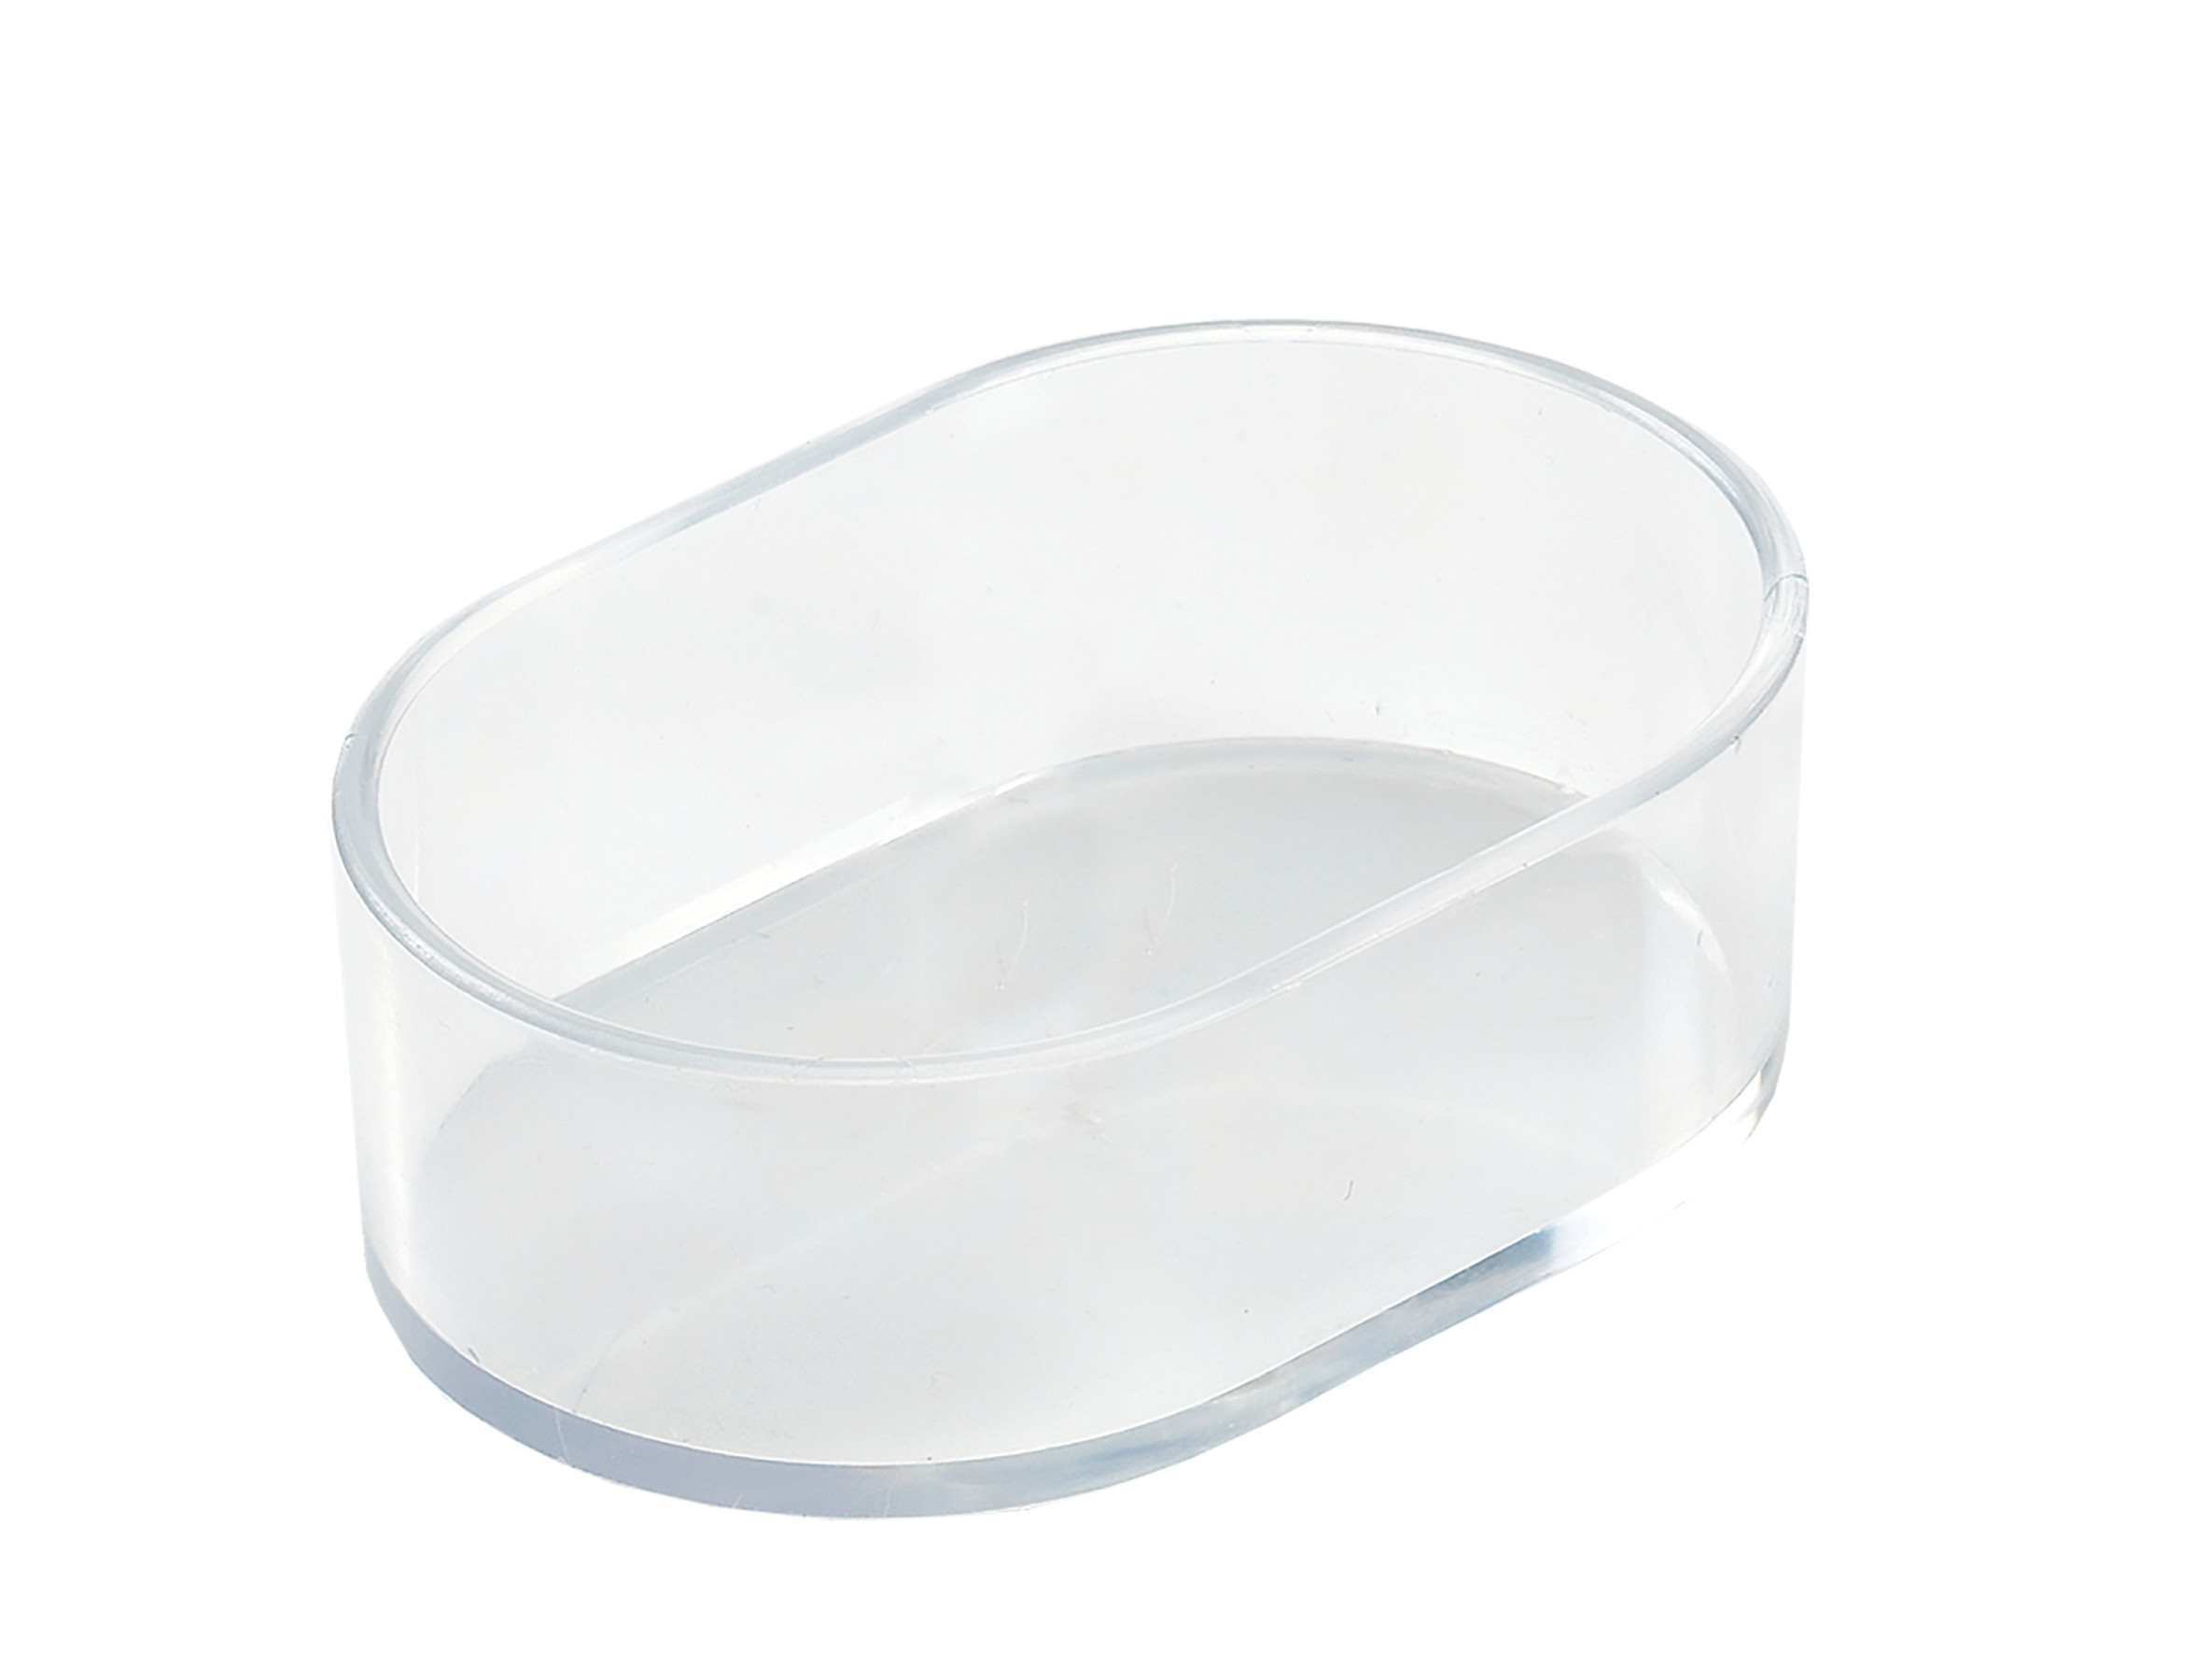 mangeoire ovale transparent